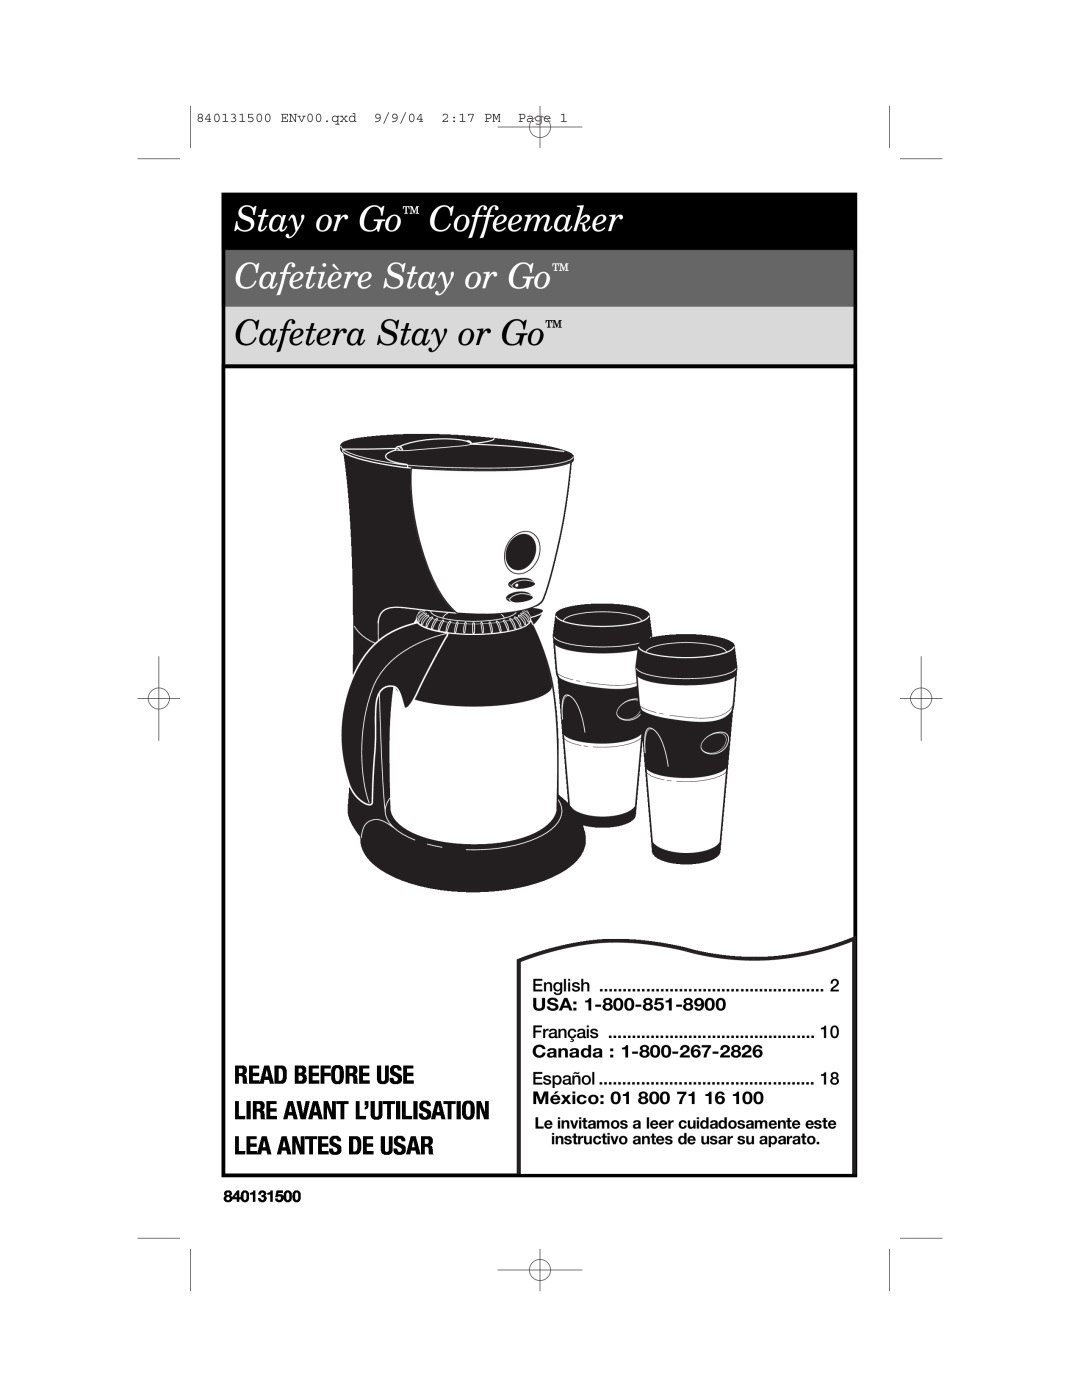 Hamilton Beach Stay or Go Coffeemaker manual Read Before Use, Lire Avant L’Utilisation Lea Antes De Usar, English, Español 